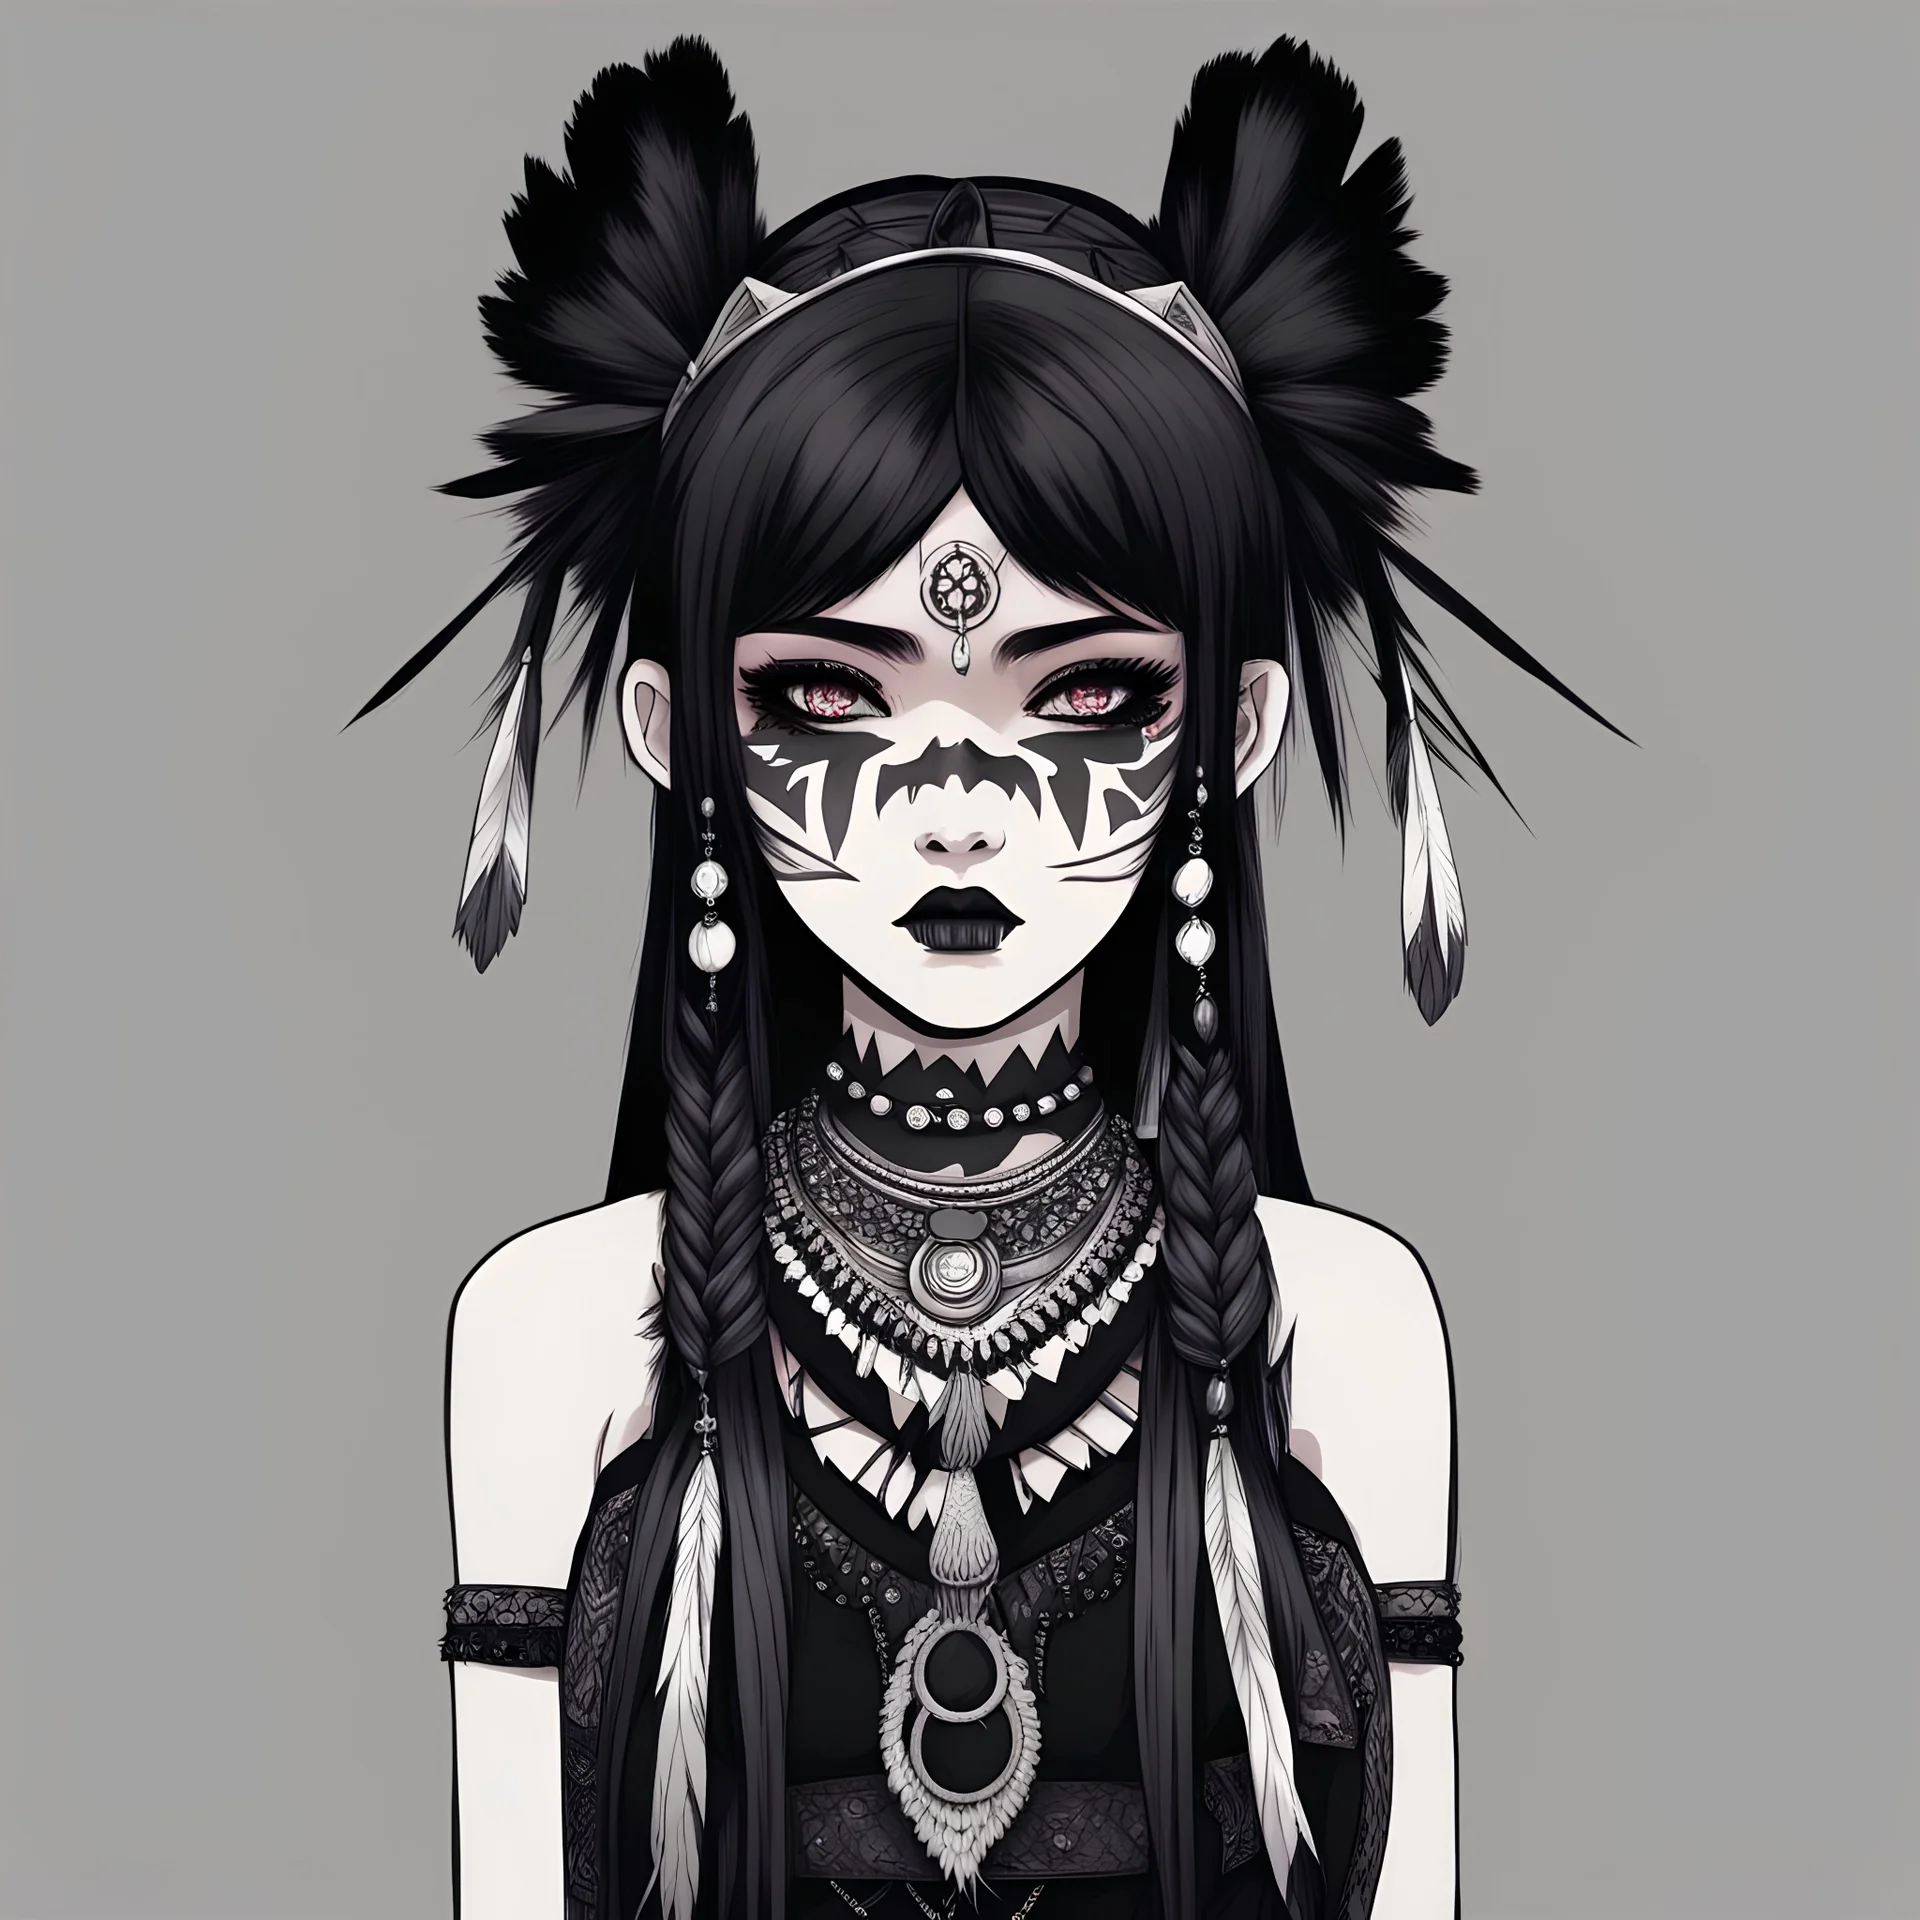 Navajo goth girl, anime style